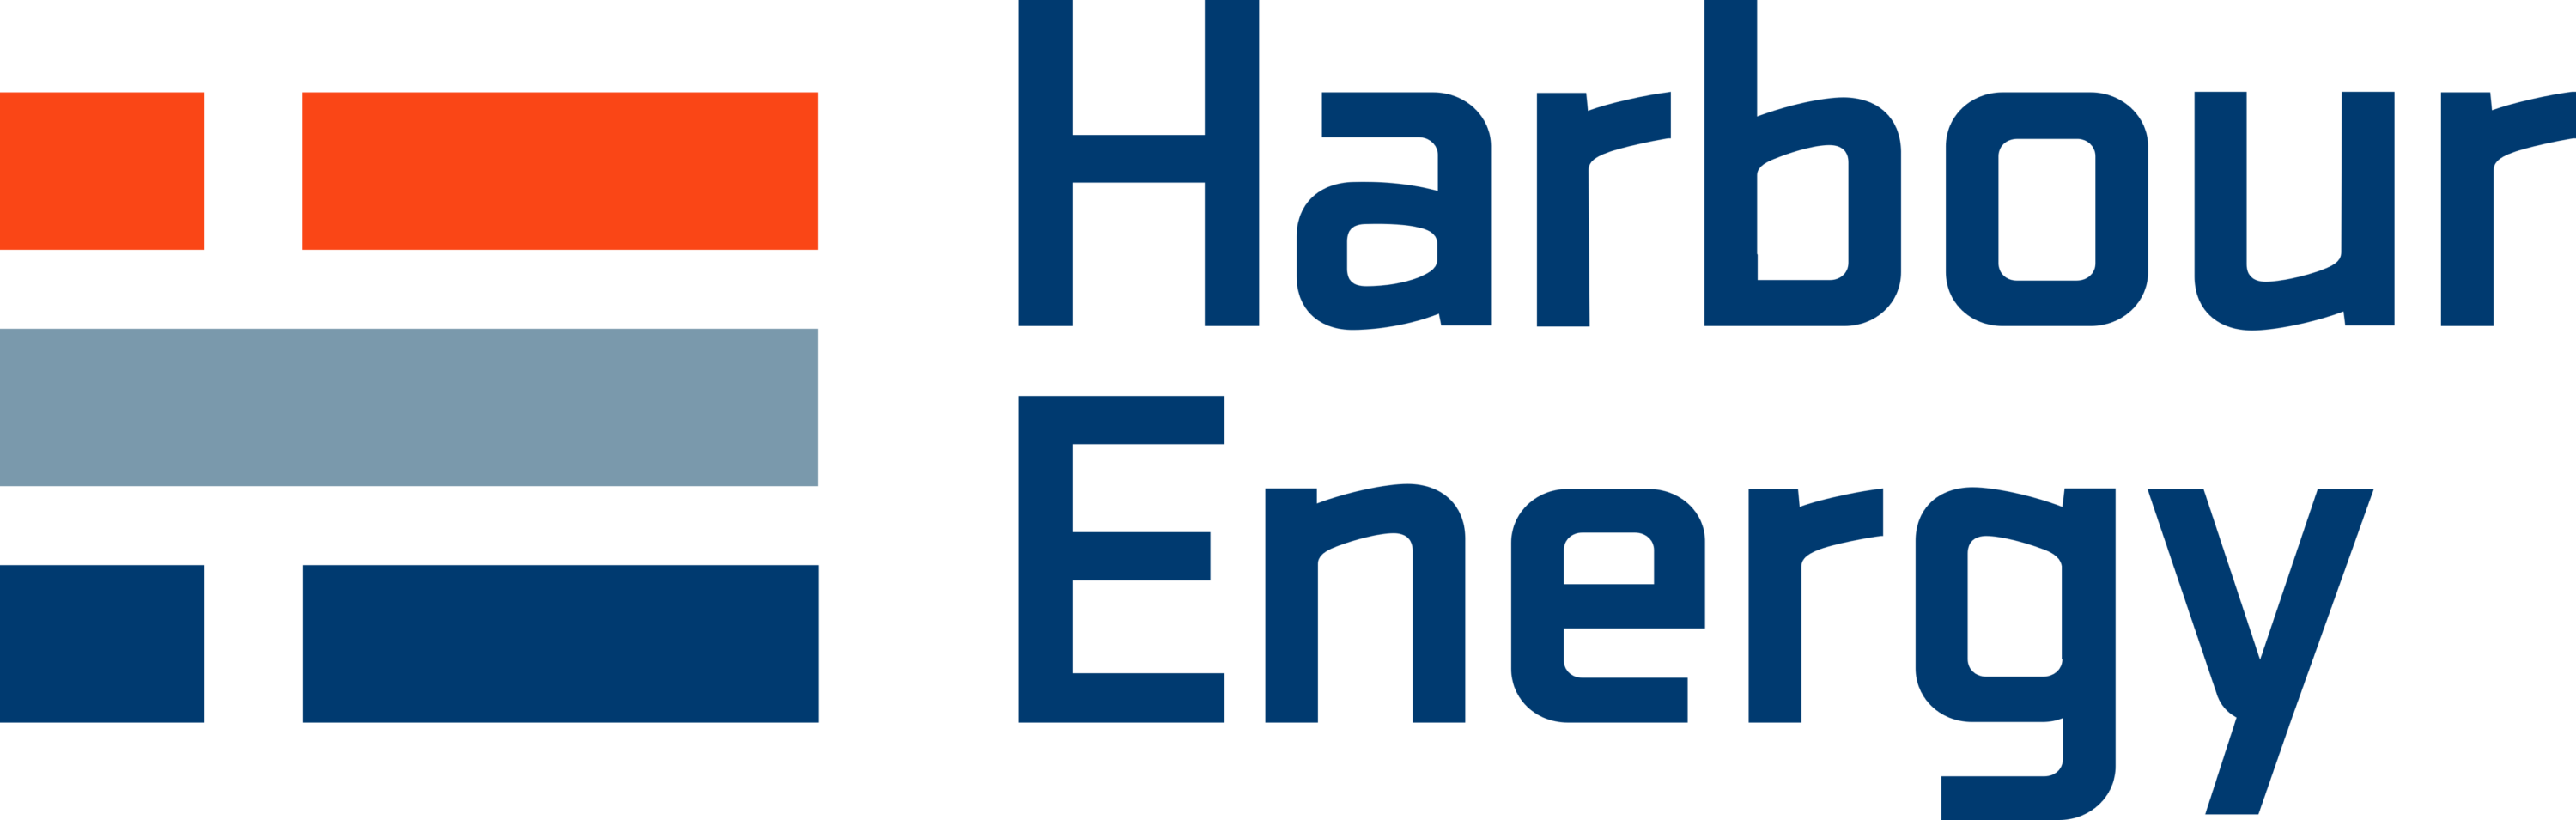 Harbour Energy Logo